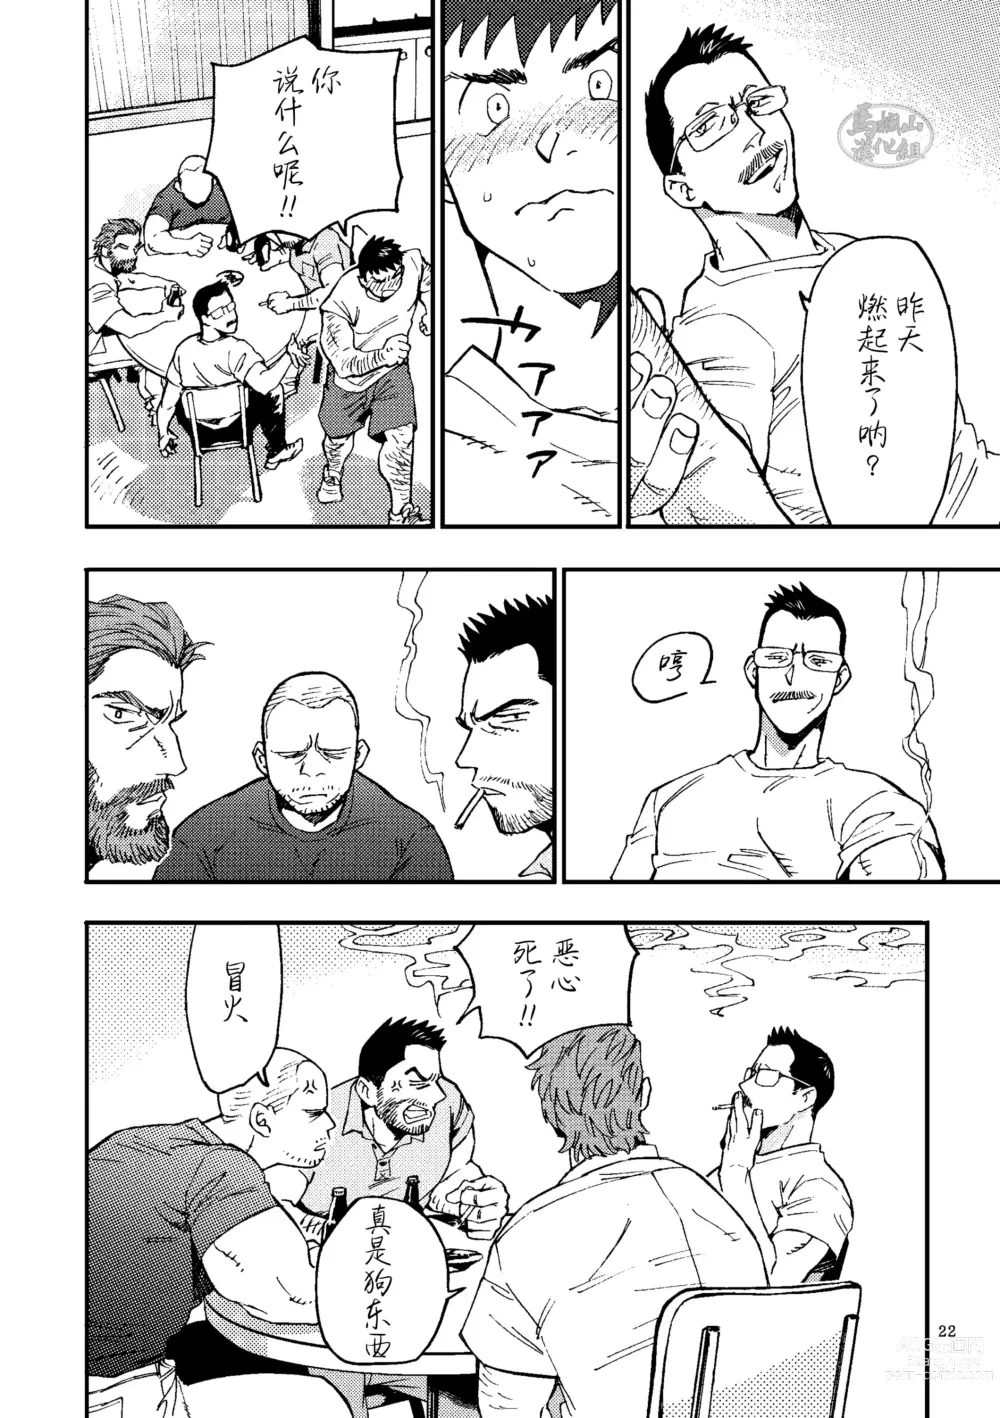 Page 23 of doujinshi GALEO6